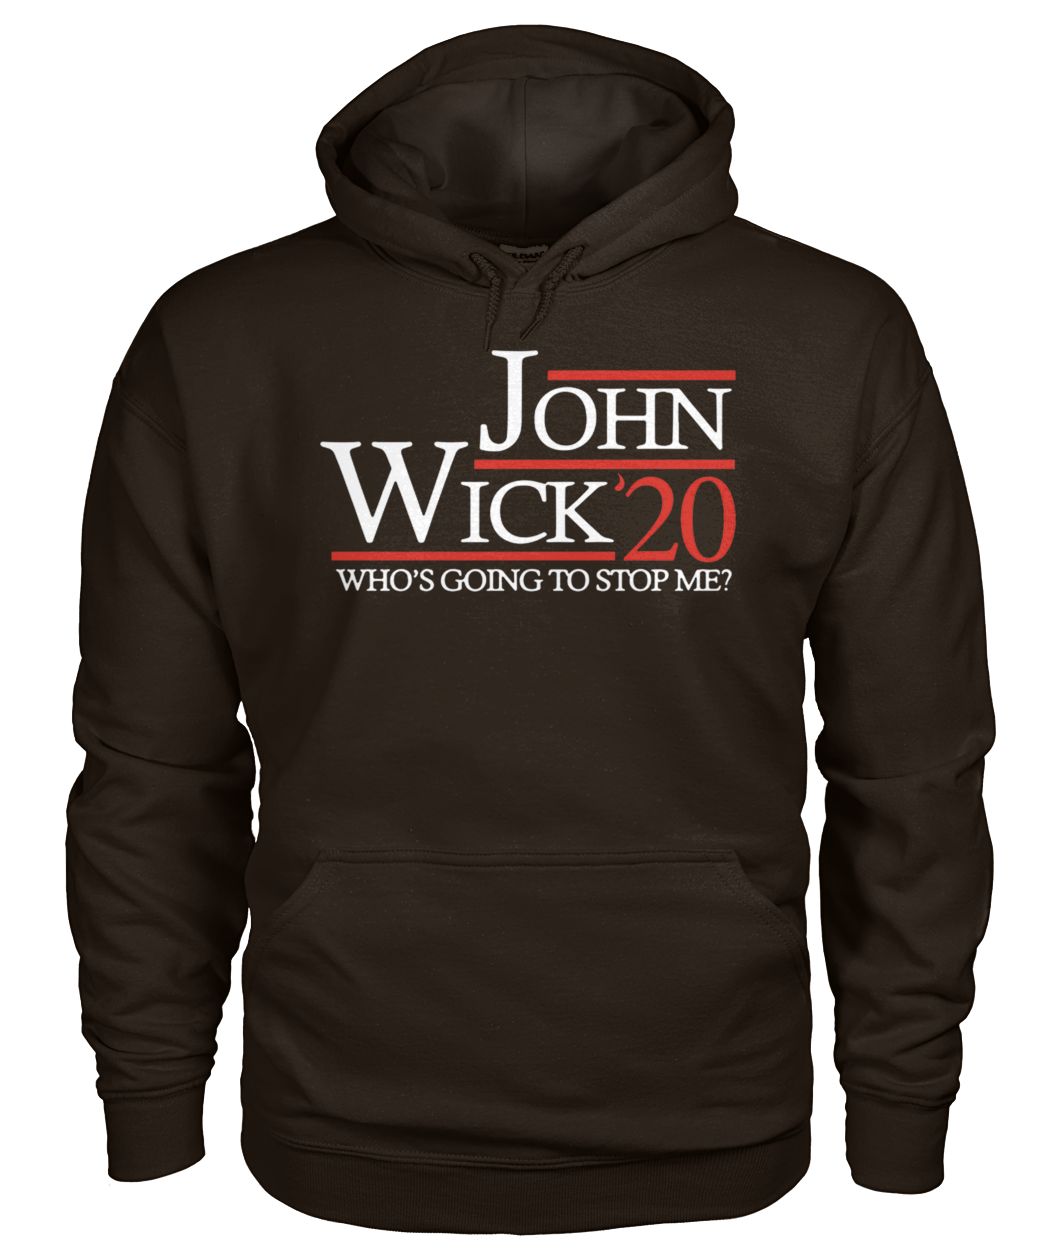 John wick 20 who's going to stop me gildan hoodie